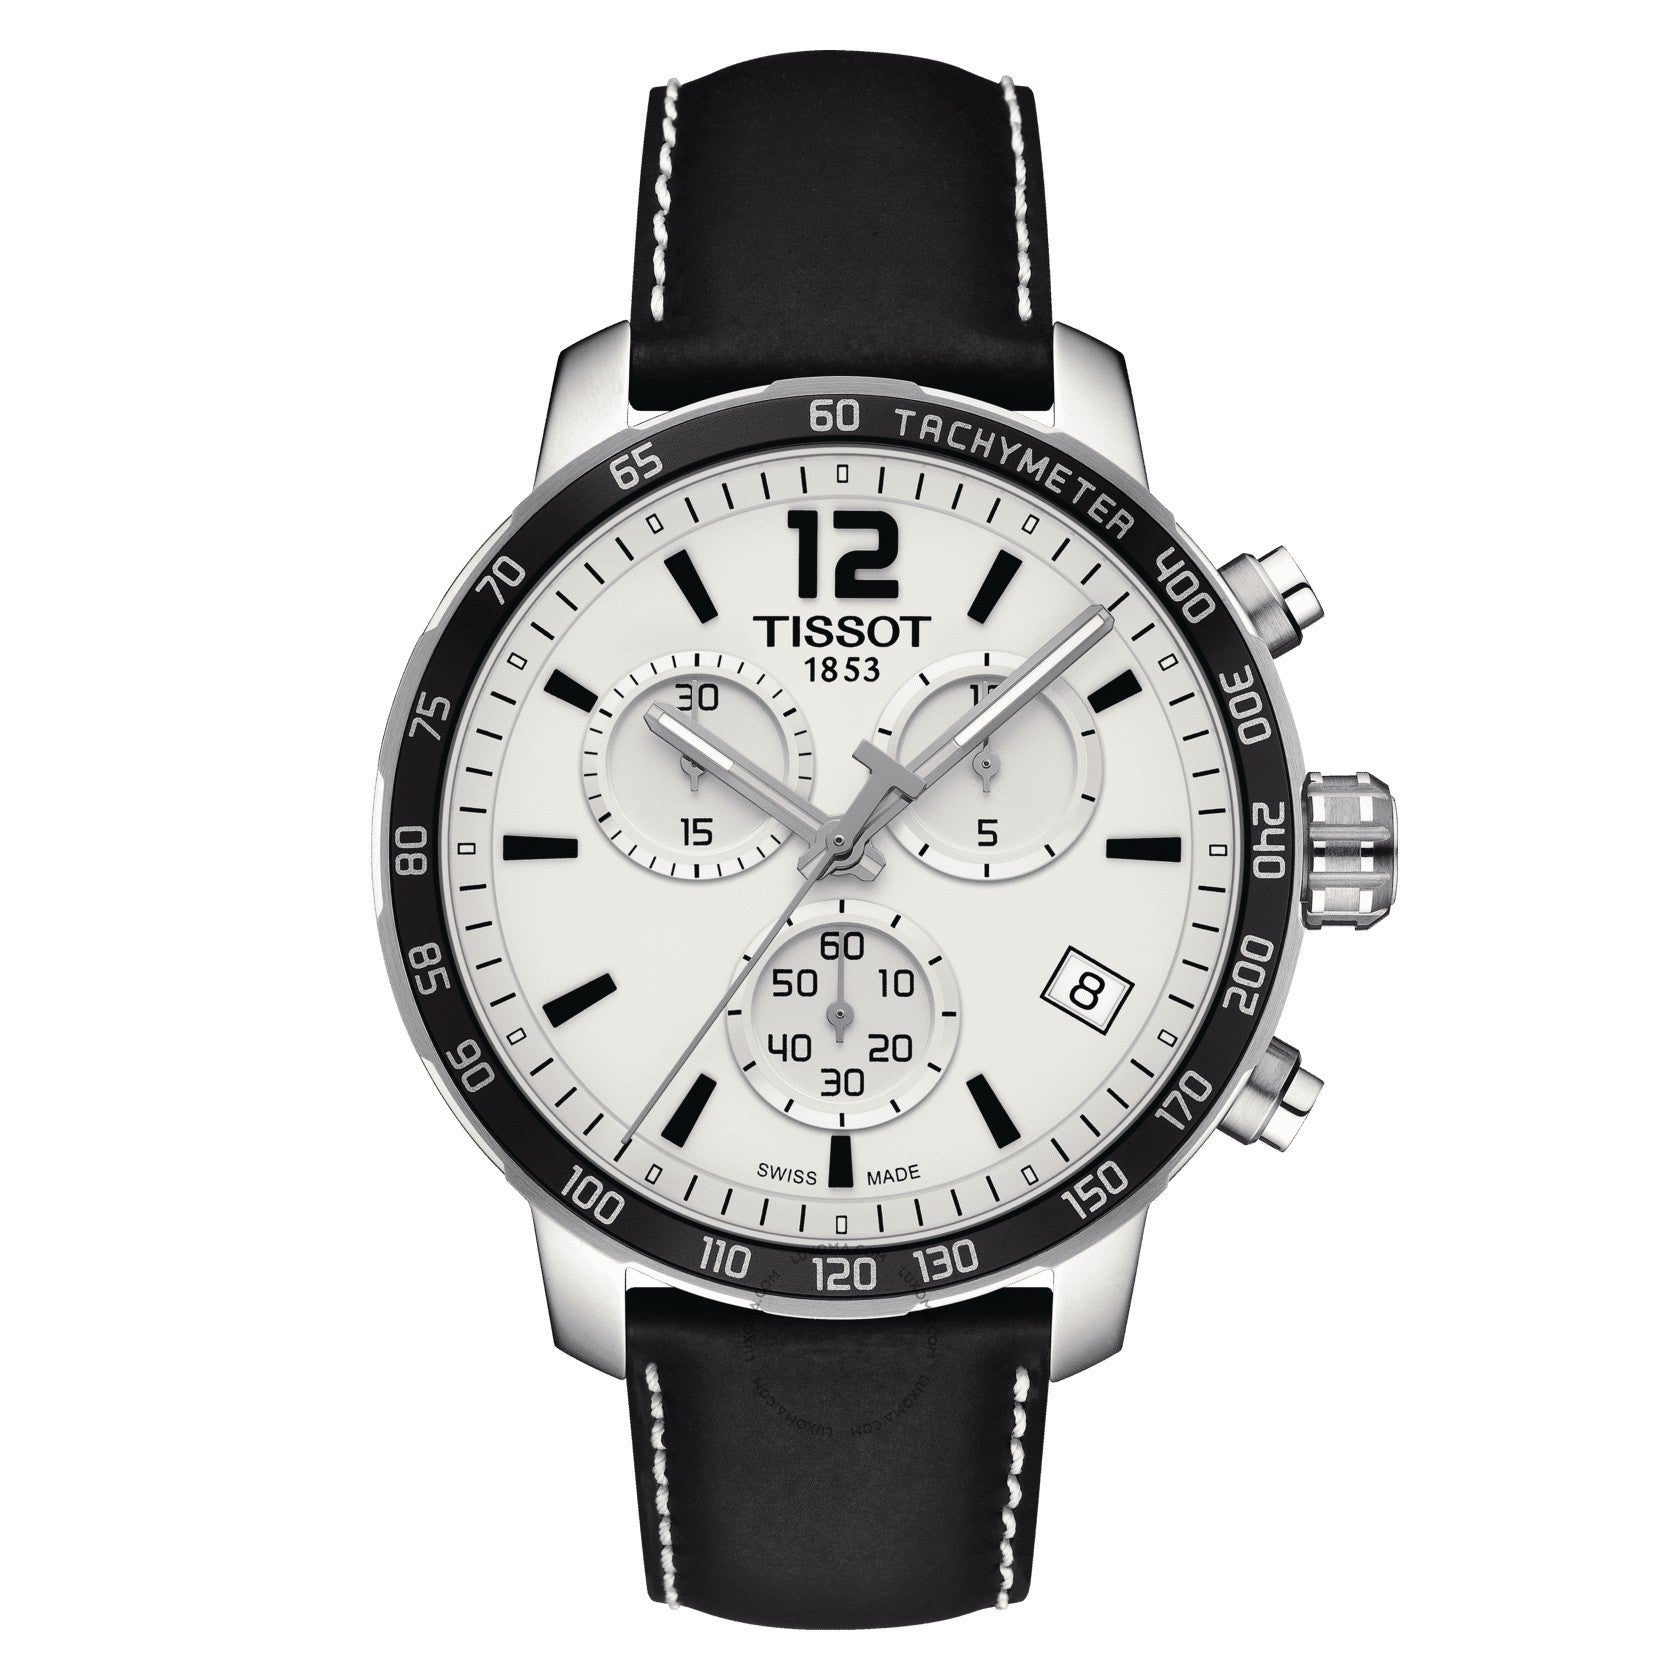 Tissot Quickster Chronograph White Dial Men's Watch T095.417.16.037.00